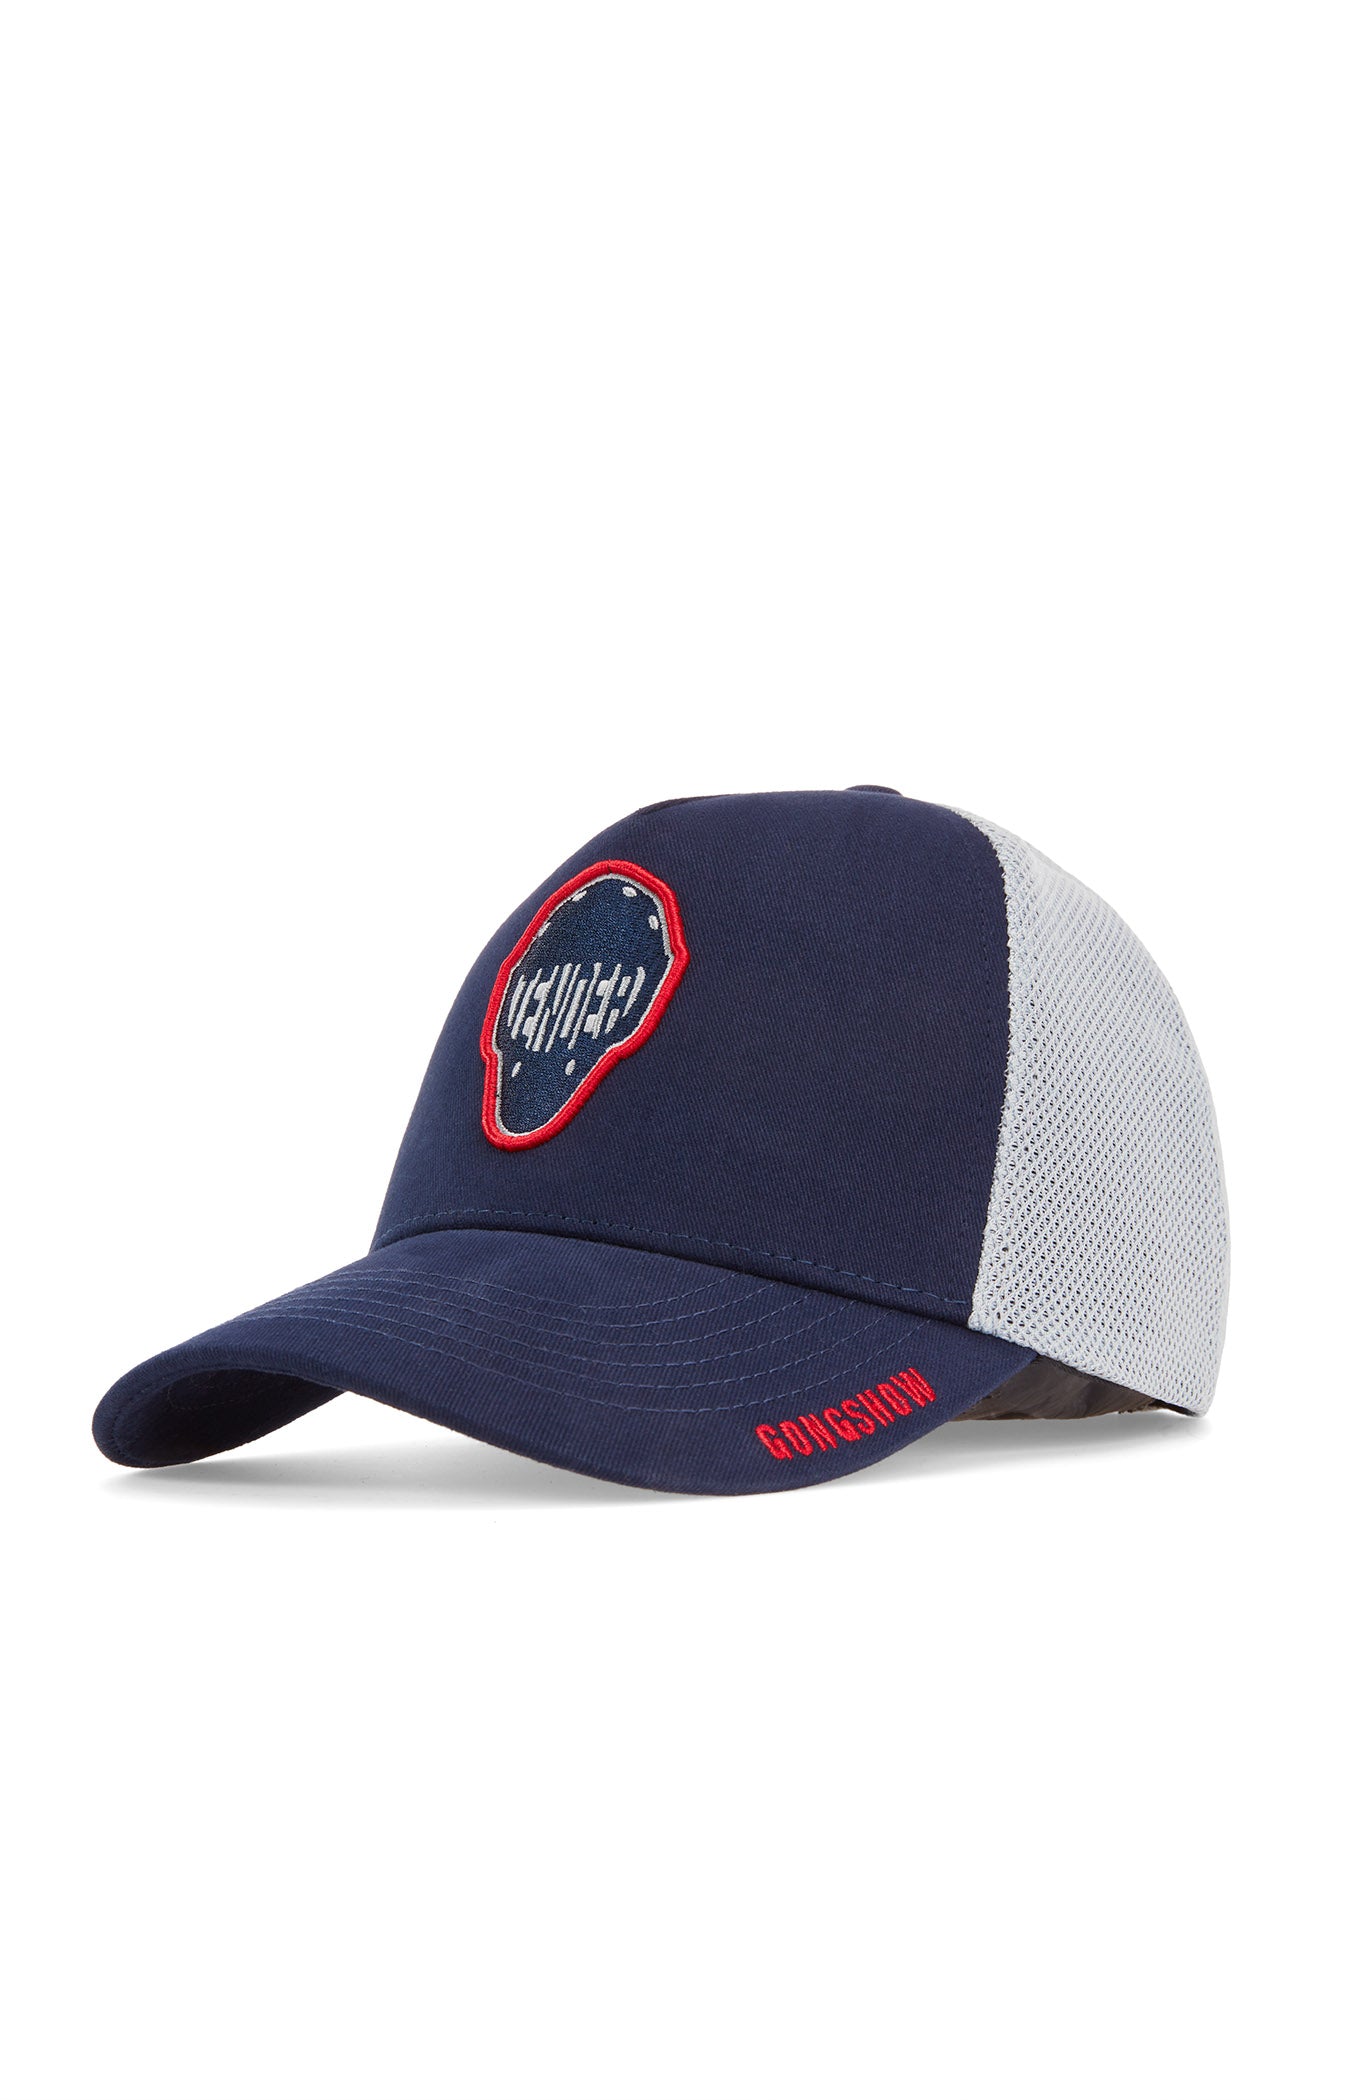 Mask On Point Men's Goalie Hockey Snapback Hat – GONGSHOW GEAR